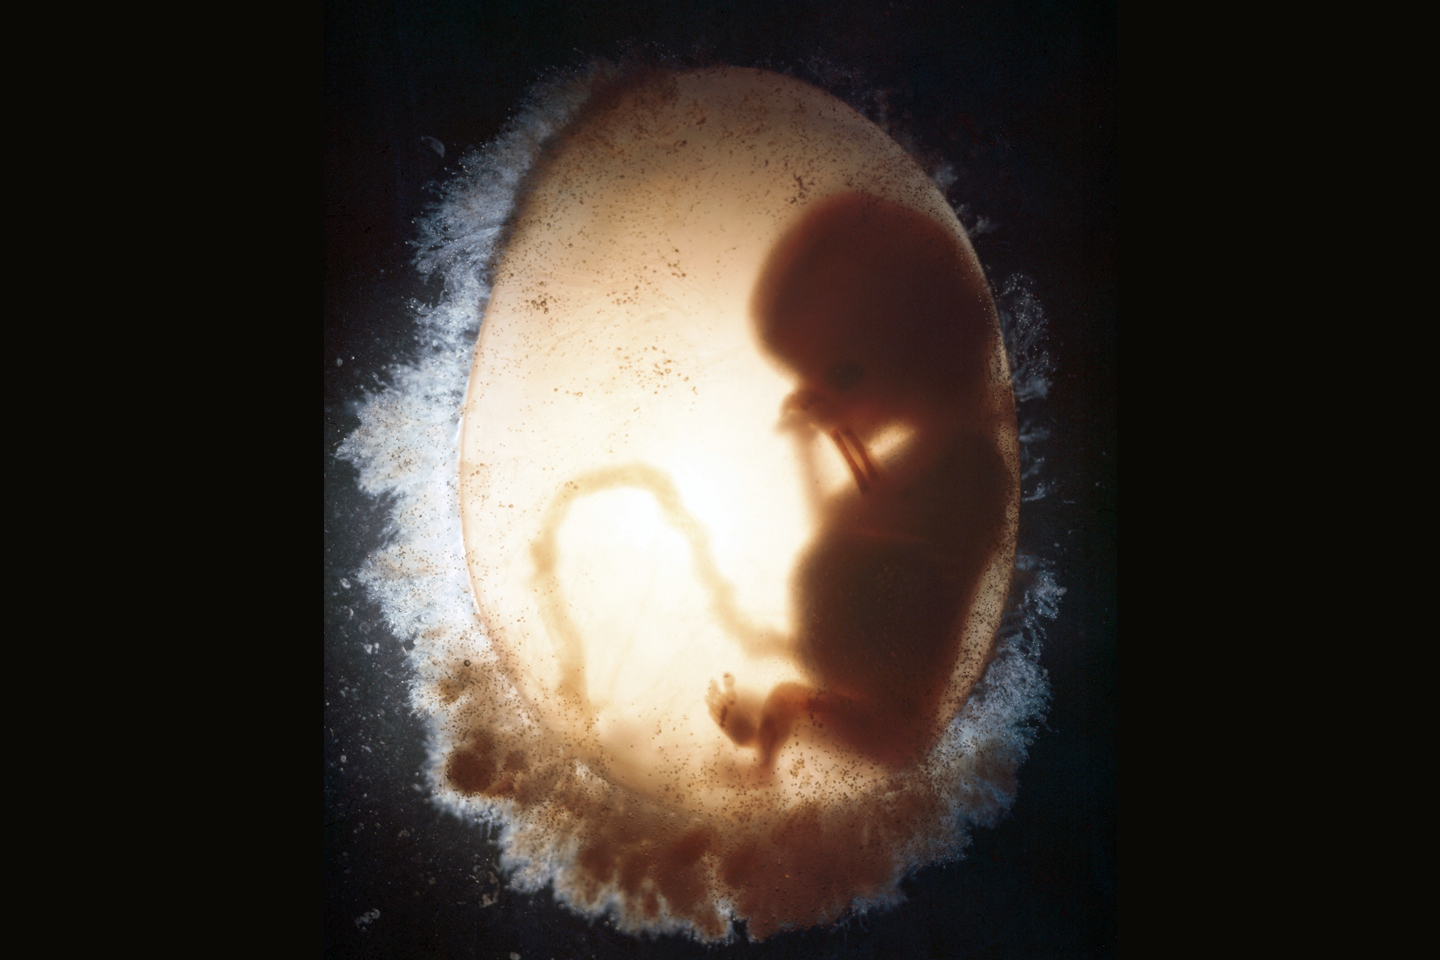 web-fetus-embryo-11-weeks-joo-lee-getty